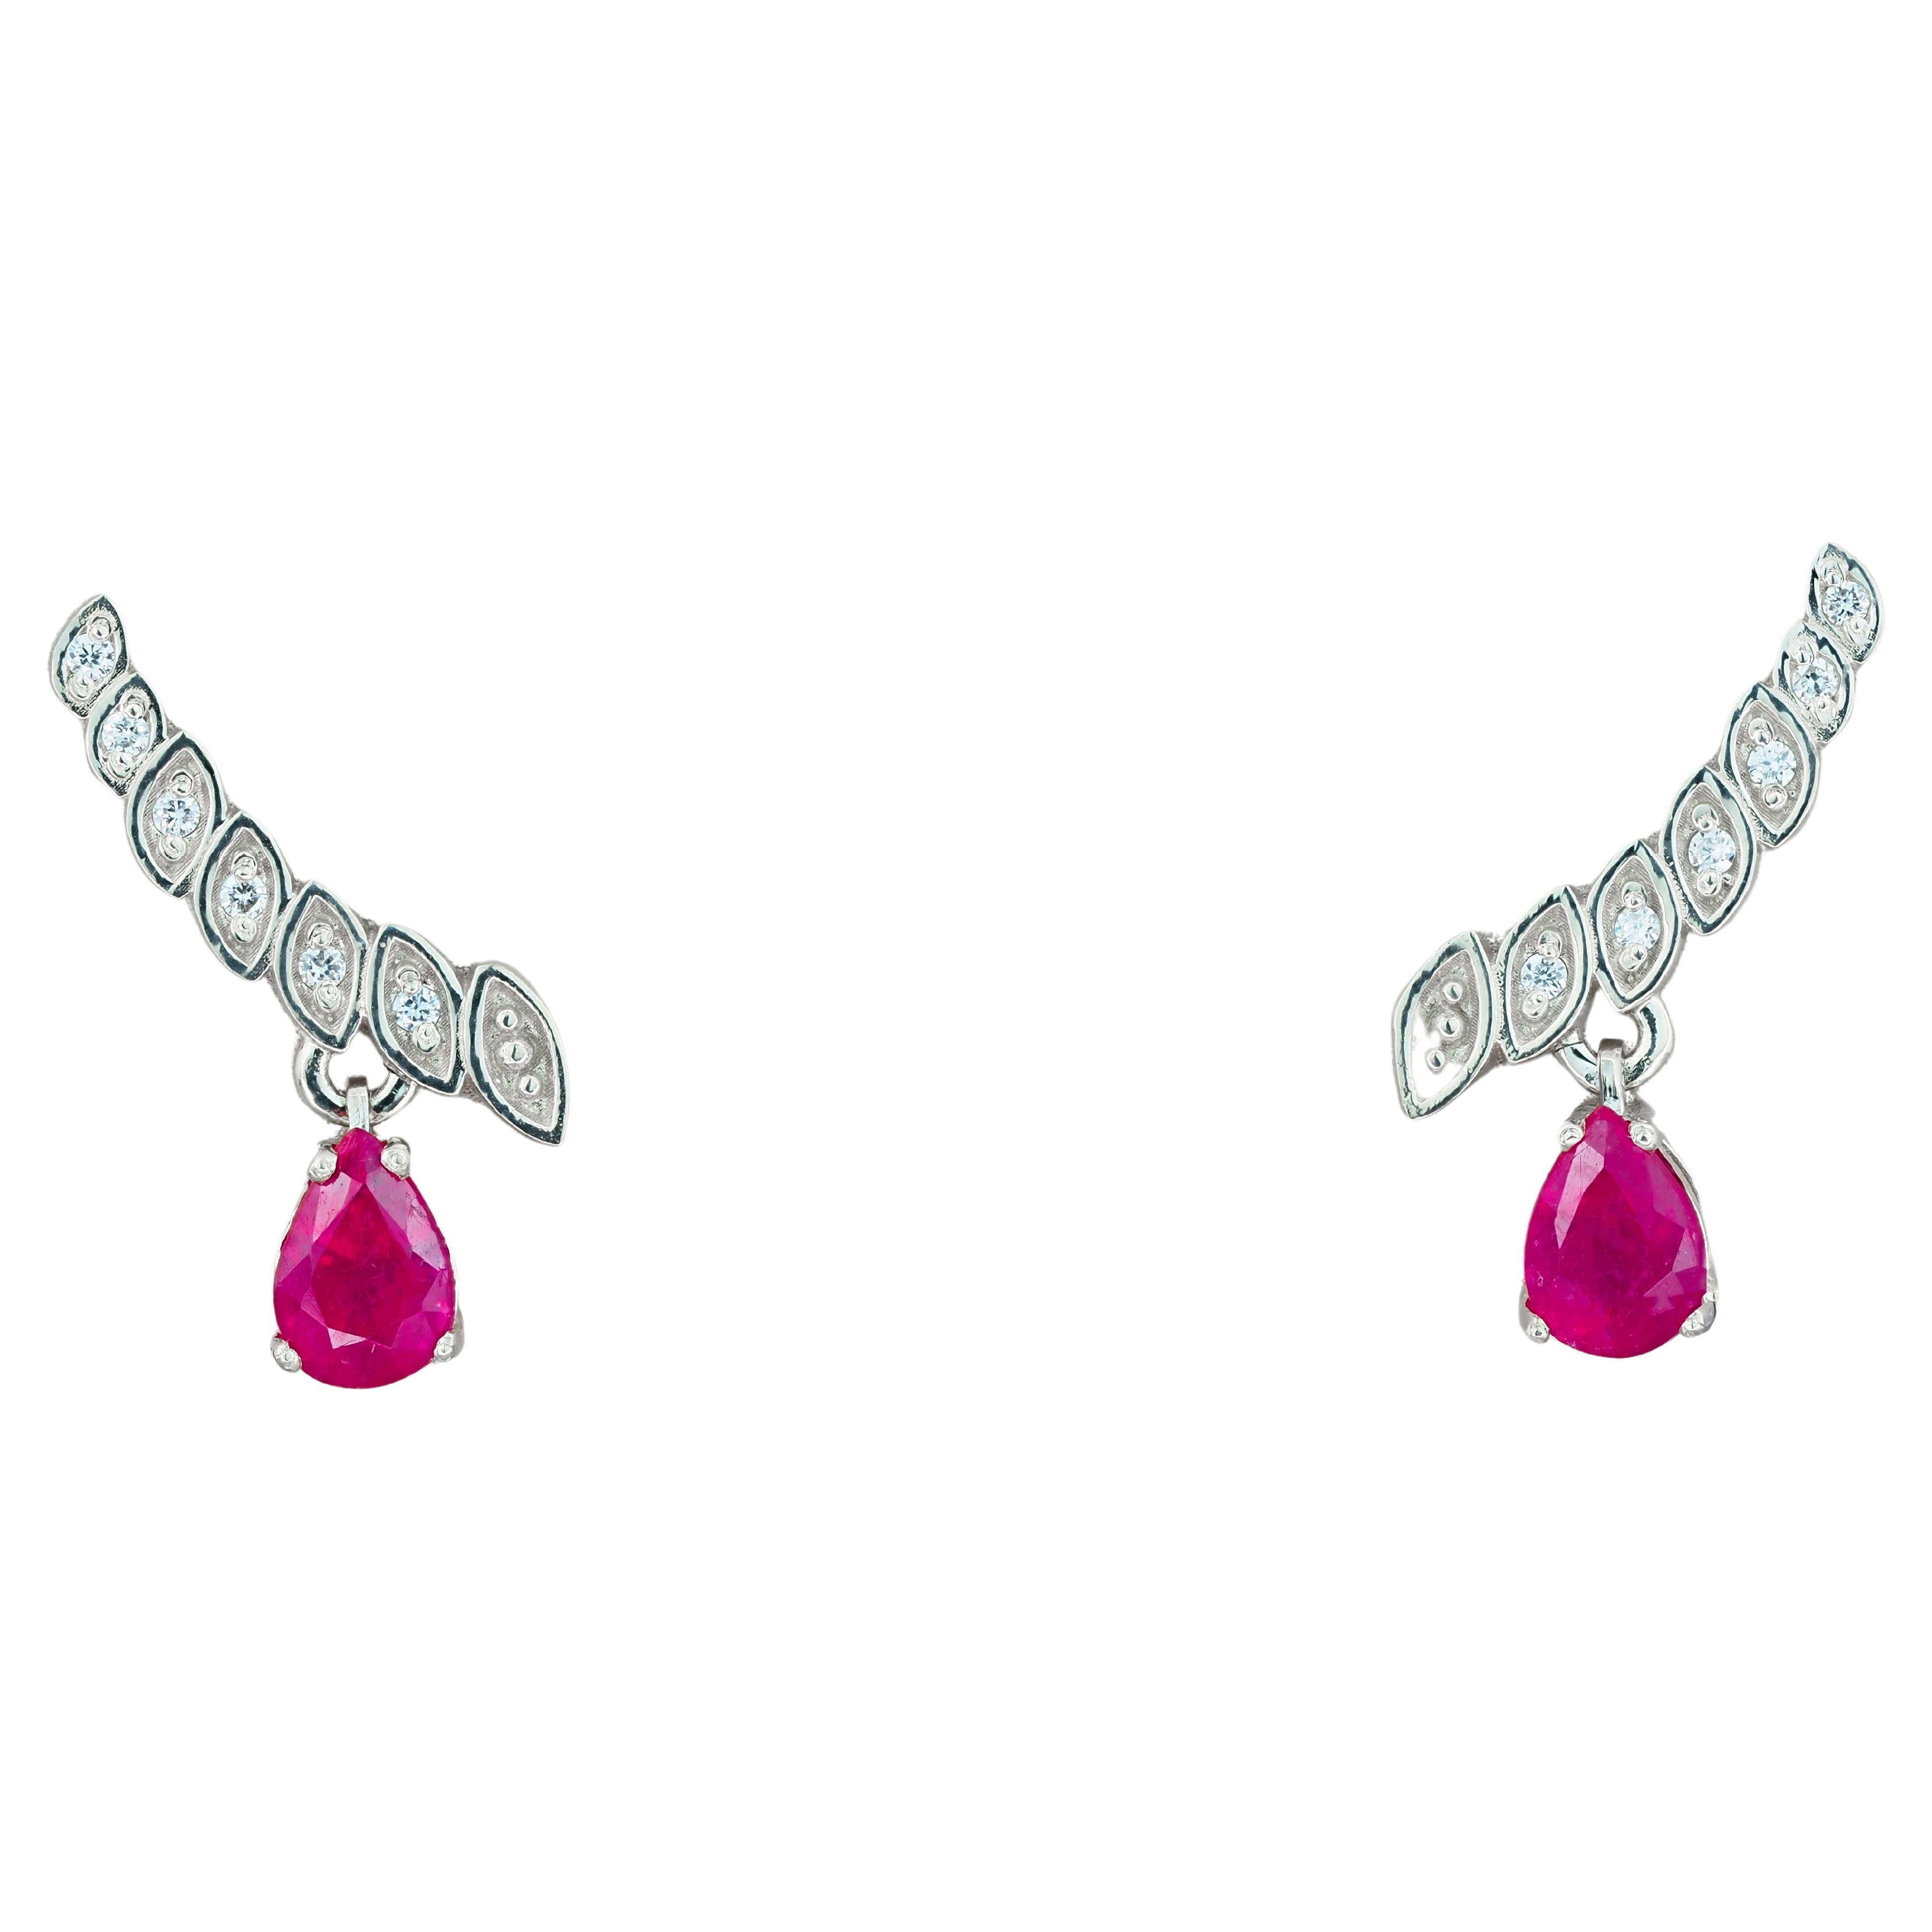 Genuine 1.5 ct rubies and diamonds earrings studs. 